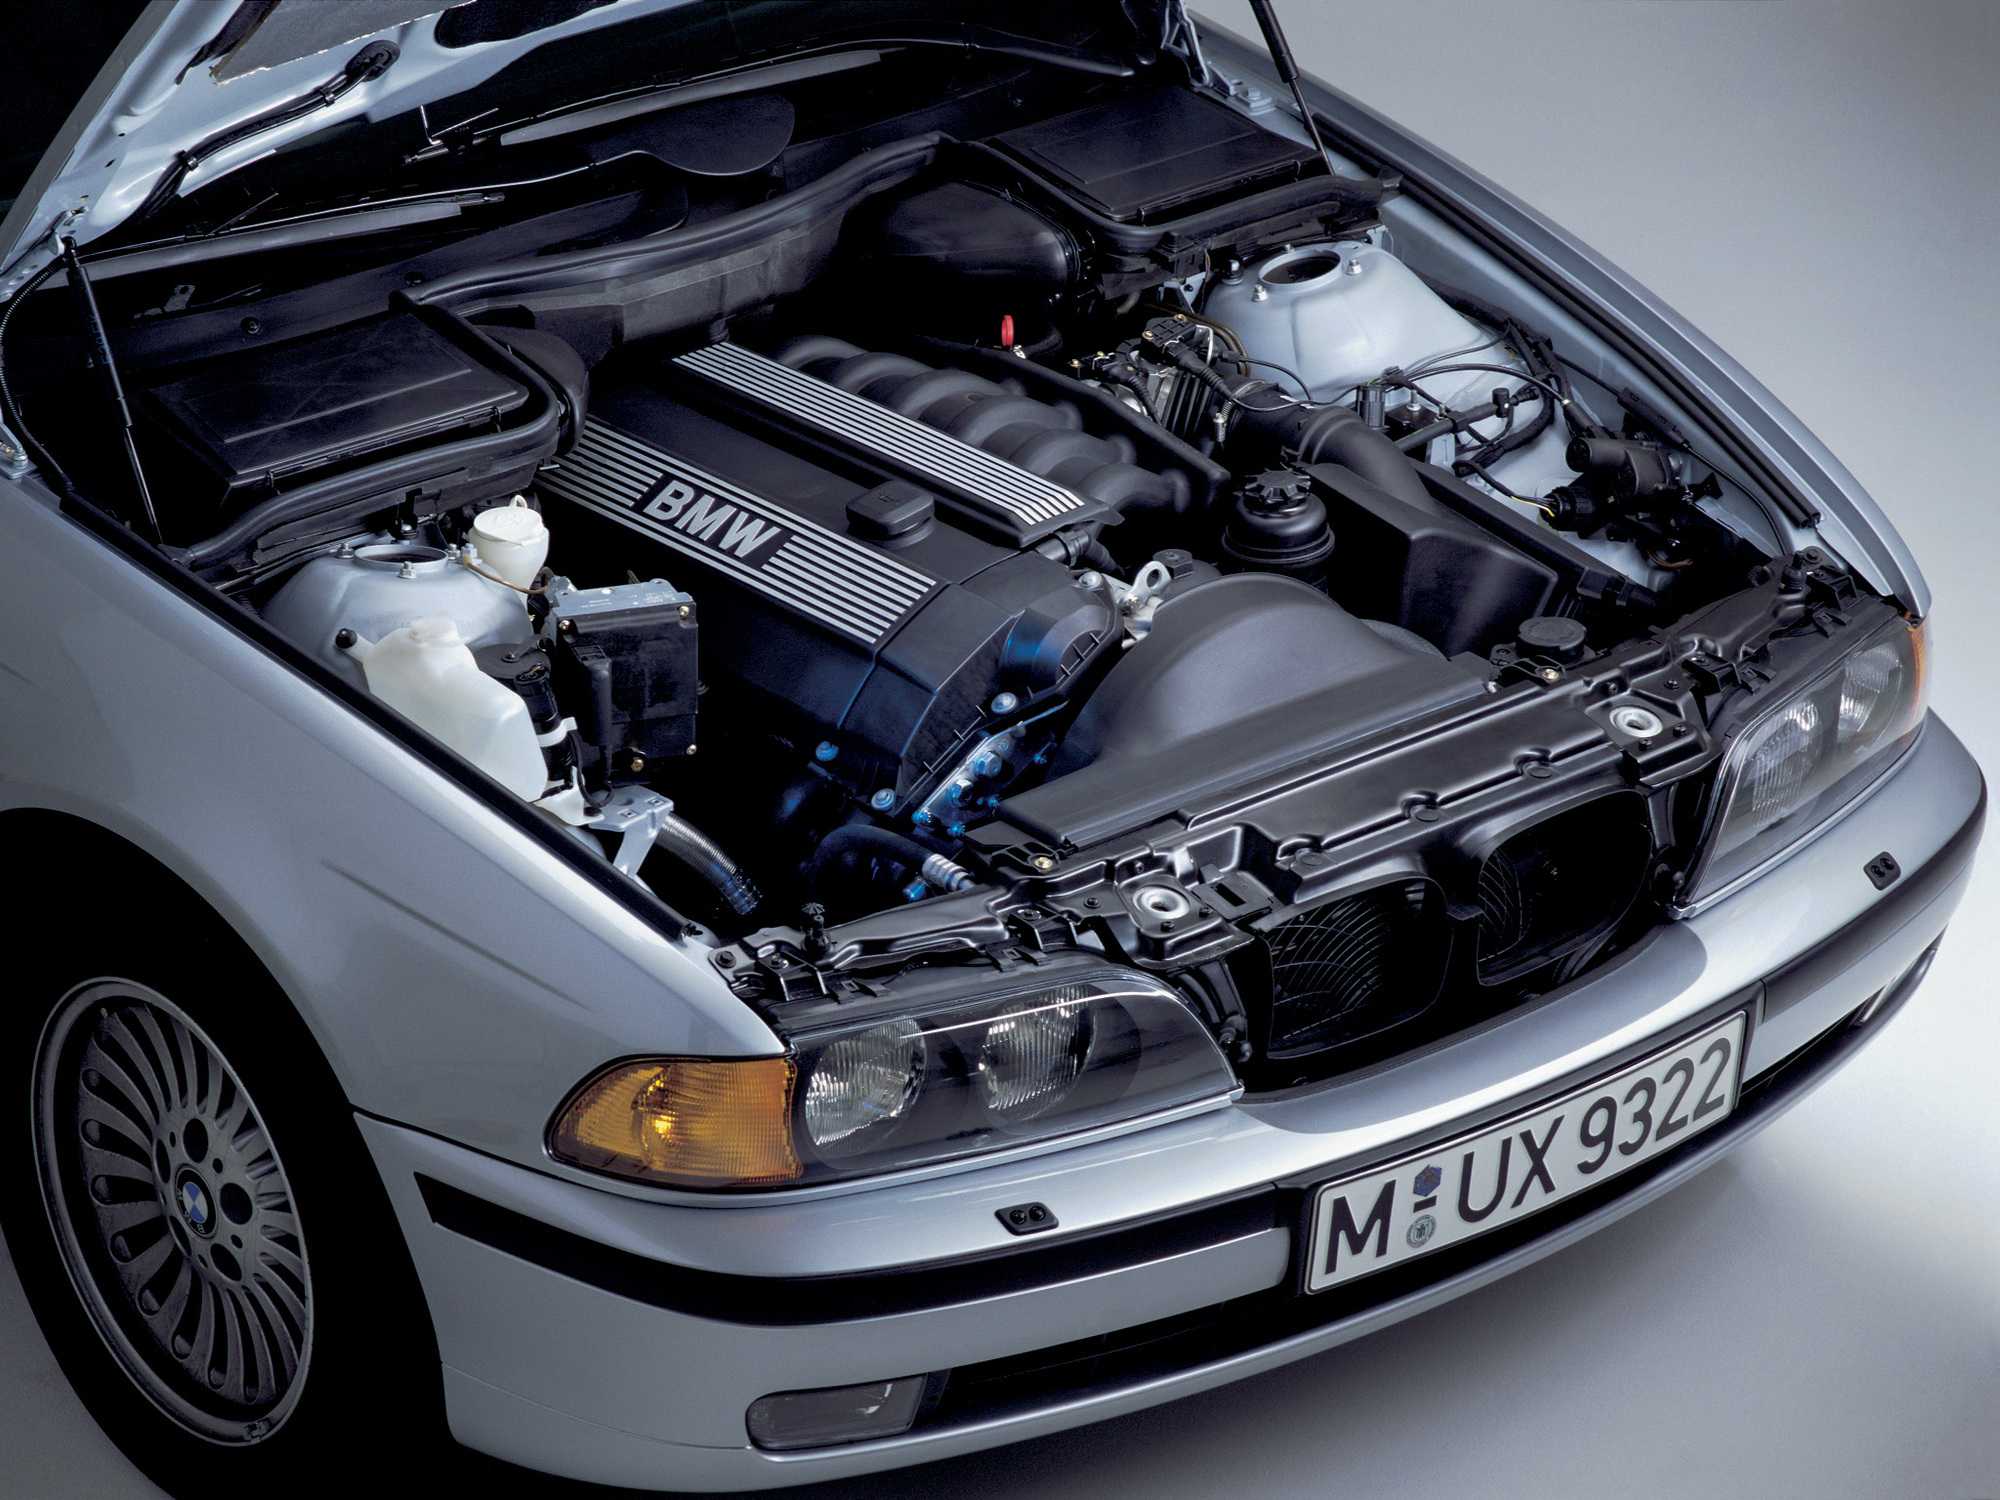 Двигатель автомобиля бмв. БМВ 523 е39. БМВ е39 4.4 мотор. E39 BMW мотор. БМВ е39 525i.